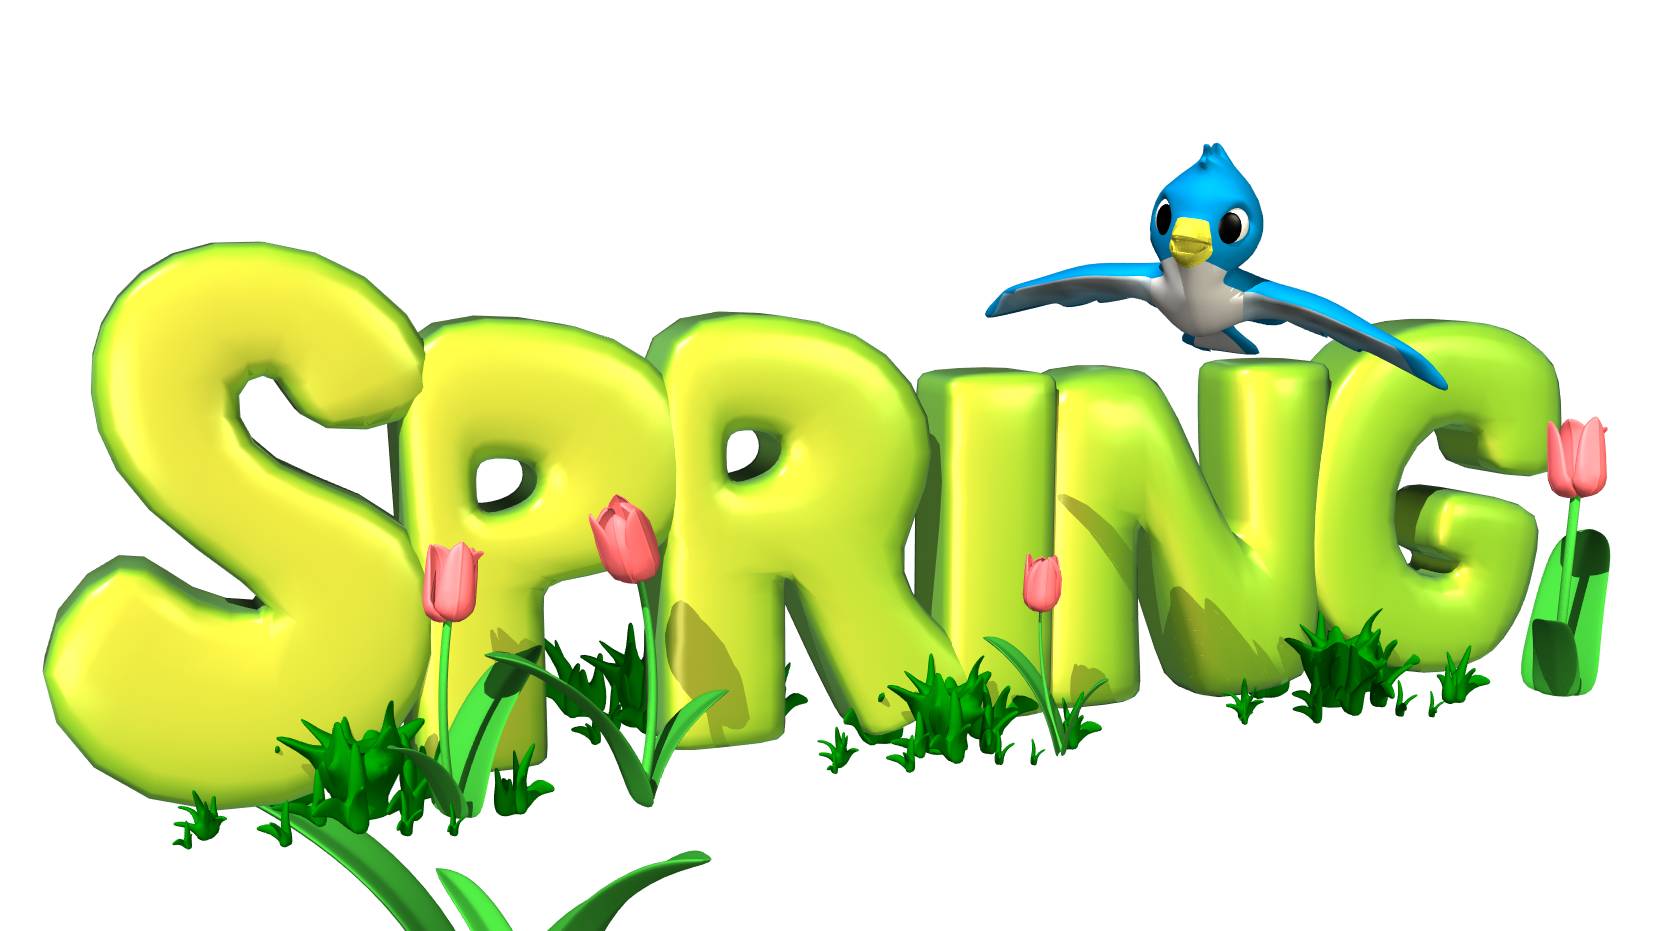 spring break clip art animated